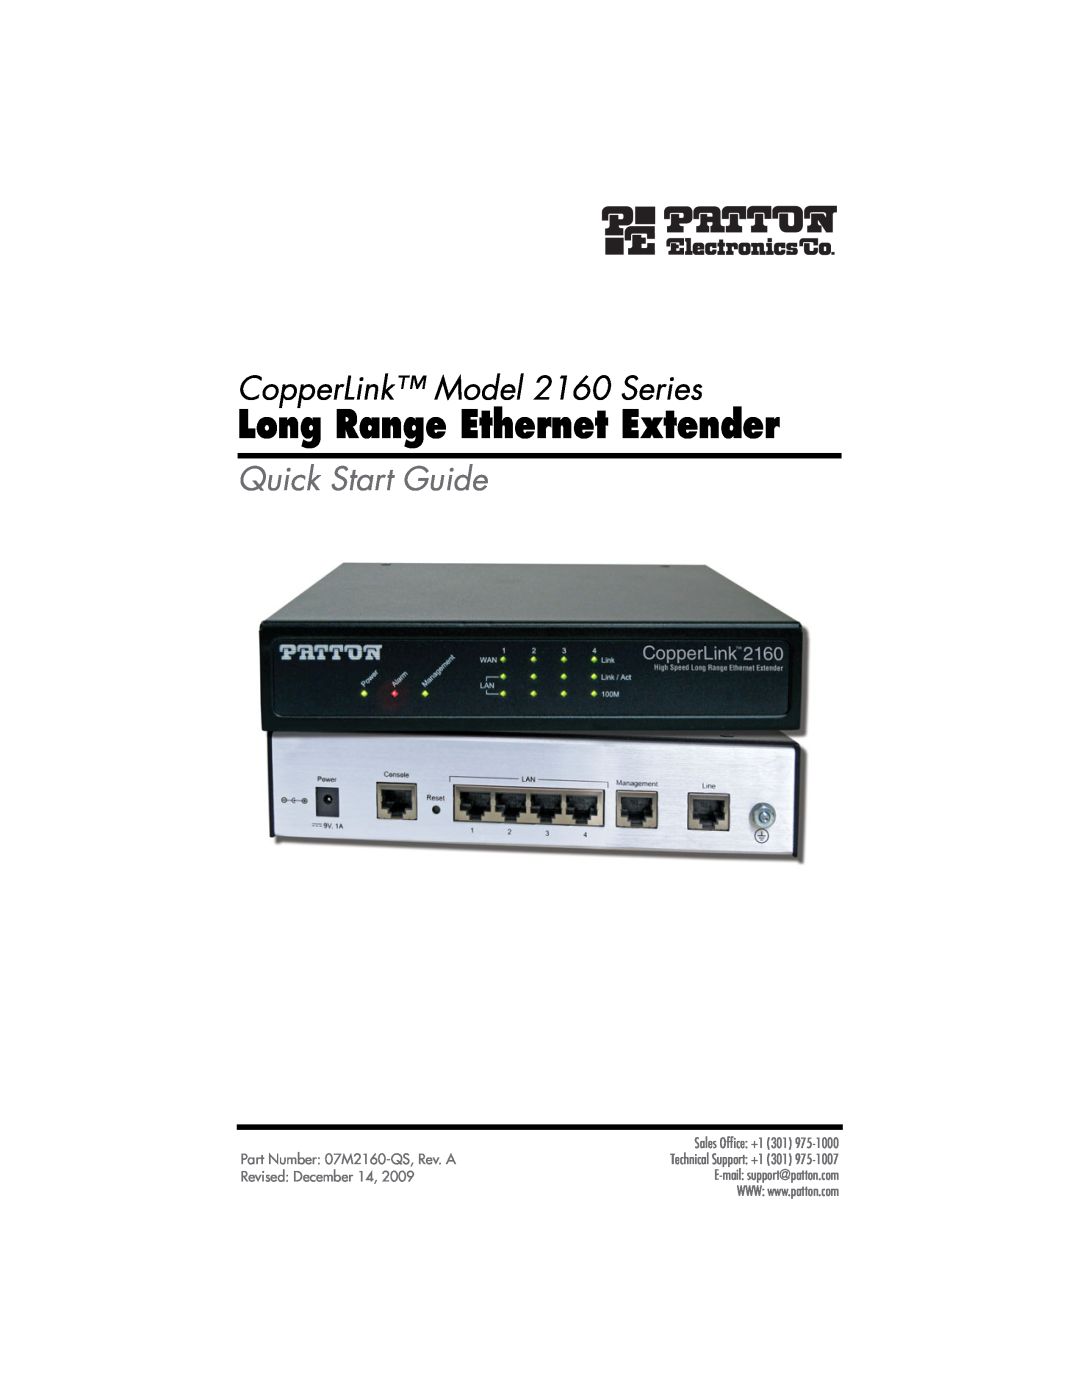 Patton electronic 07M2160-QS quick start Long Range Ethernet Extender, CopperLink Model 2160 Series, Quick Start Guide 